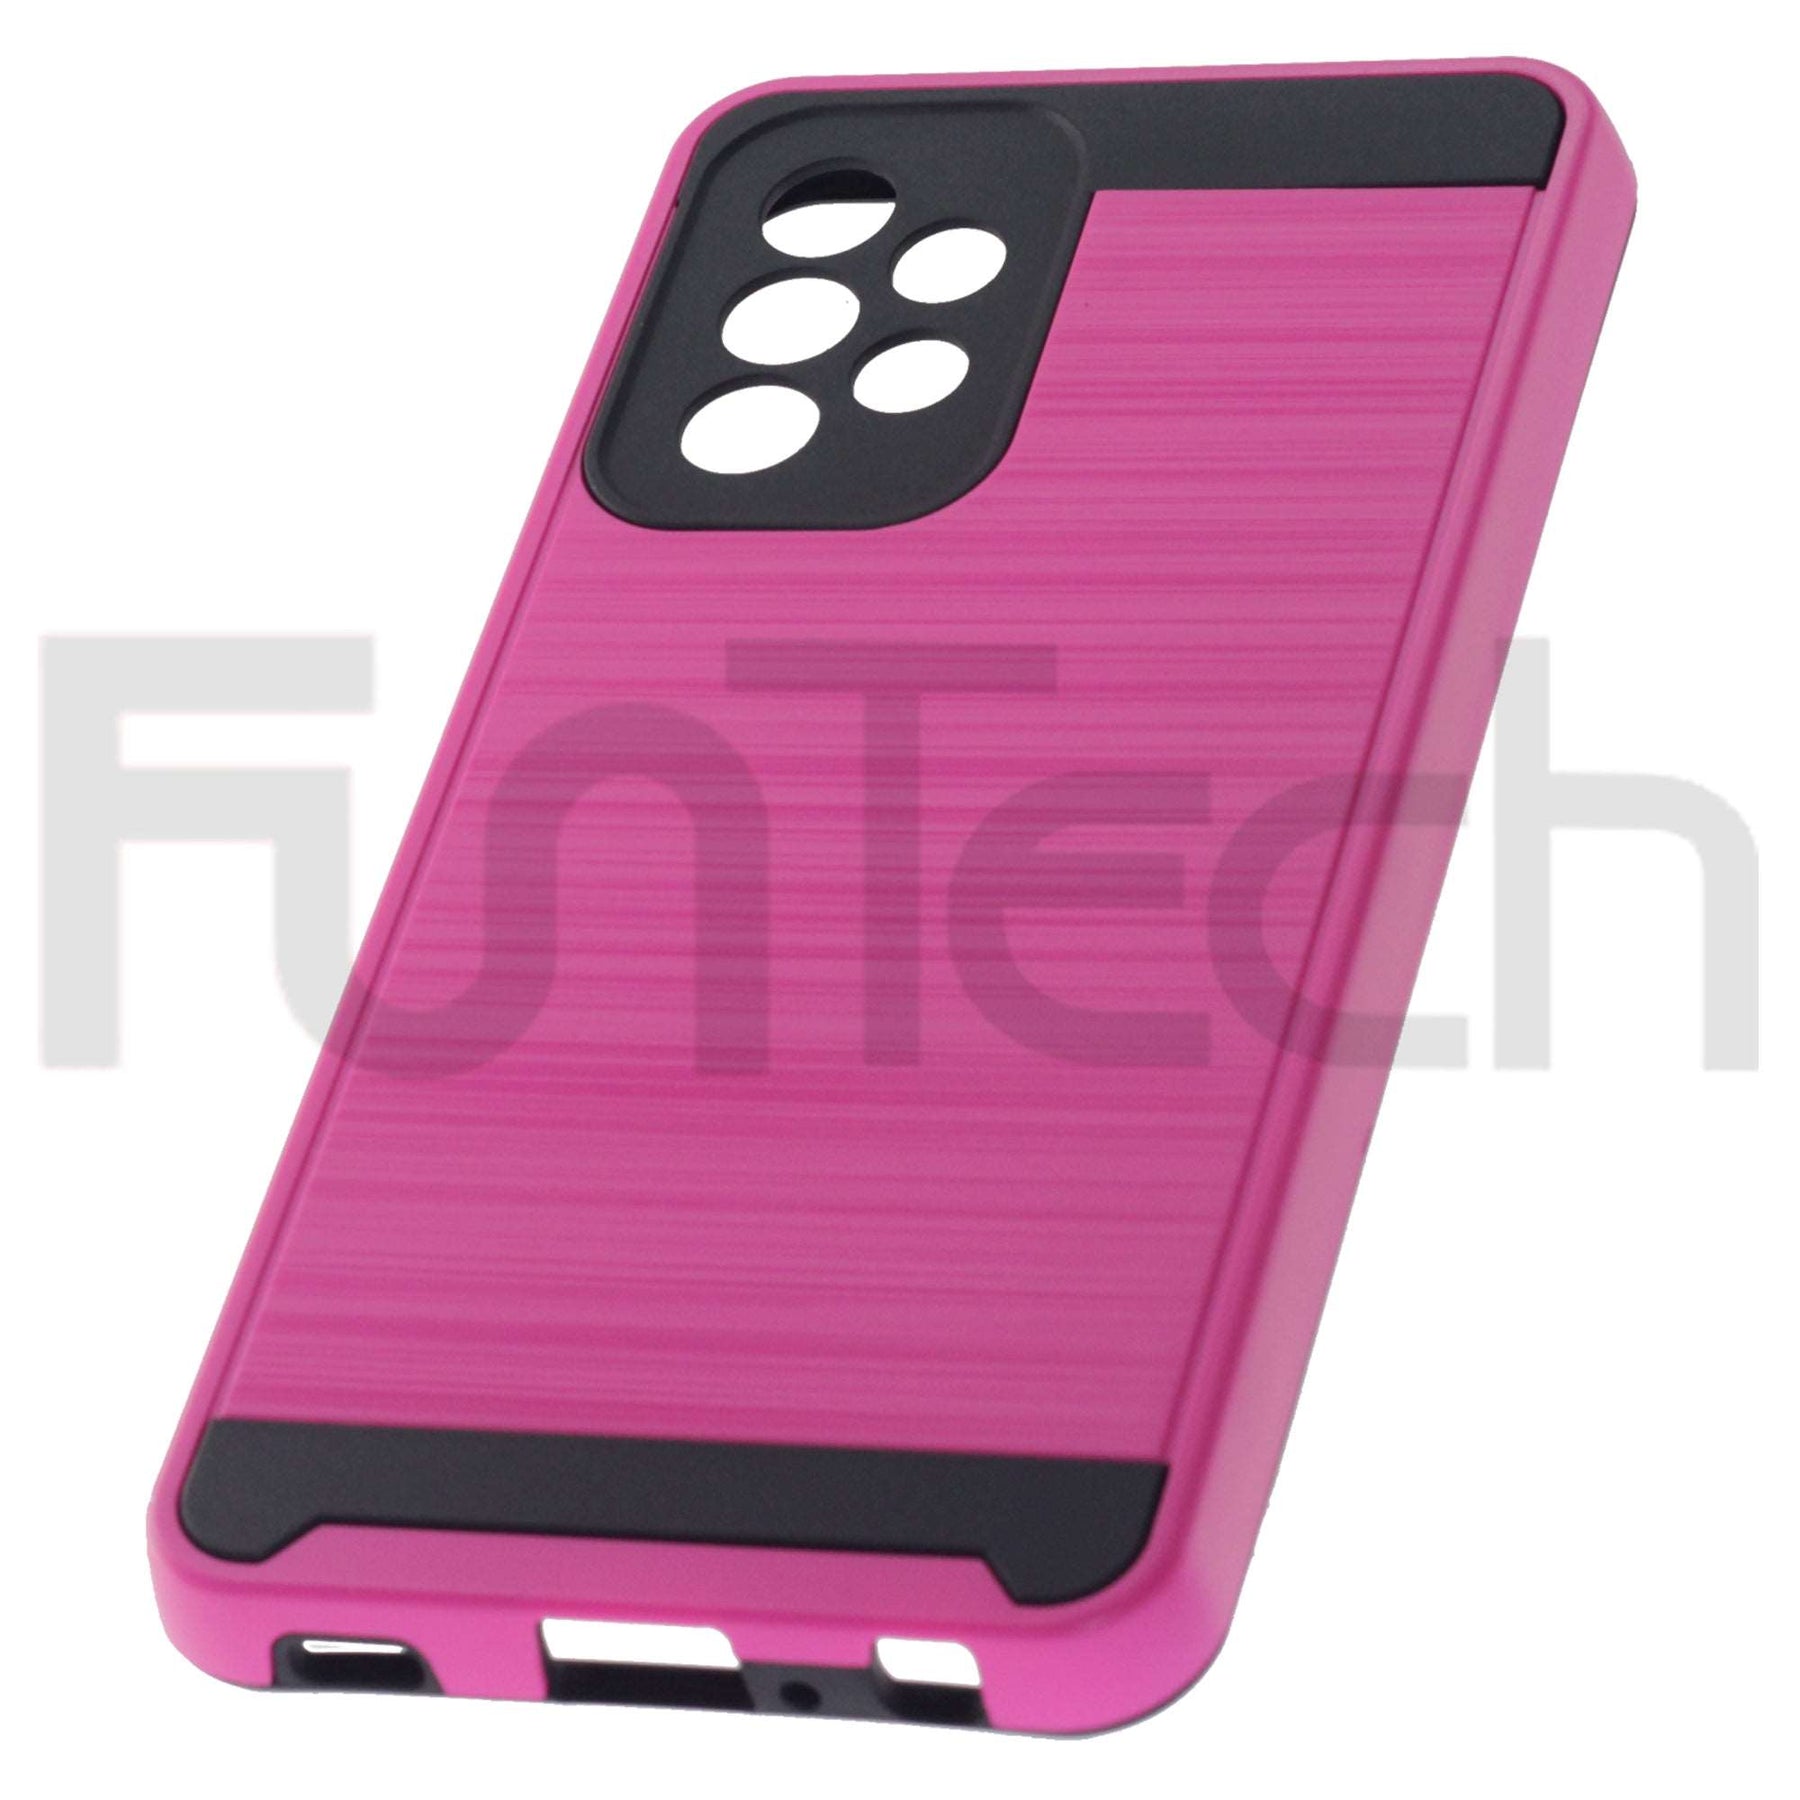 Samsung A52 (5G), Slim Armor Case, Color Pink.